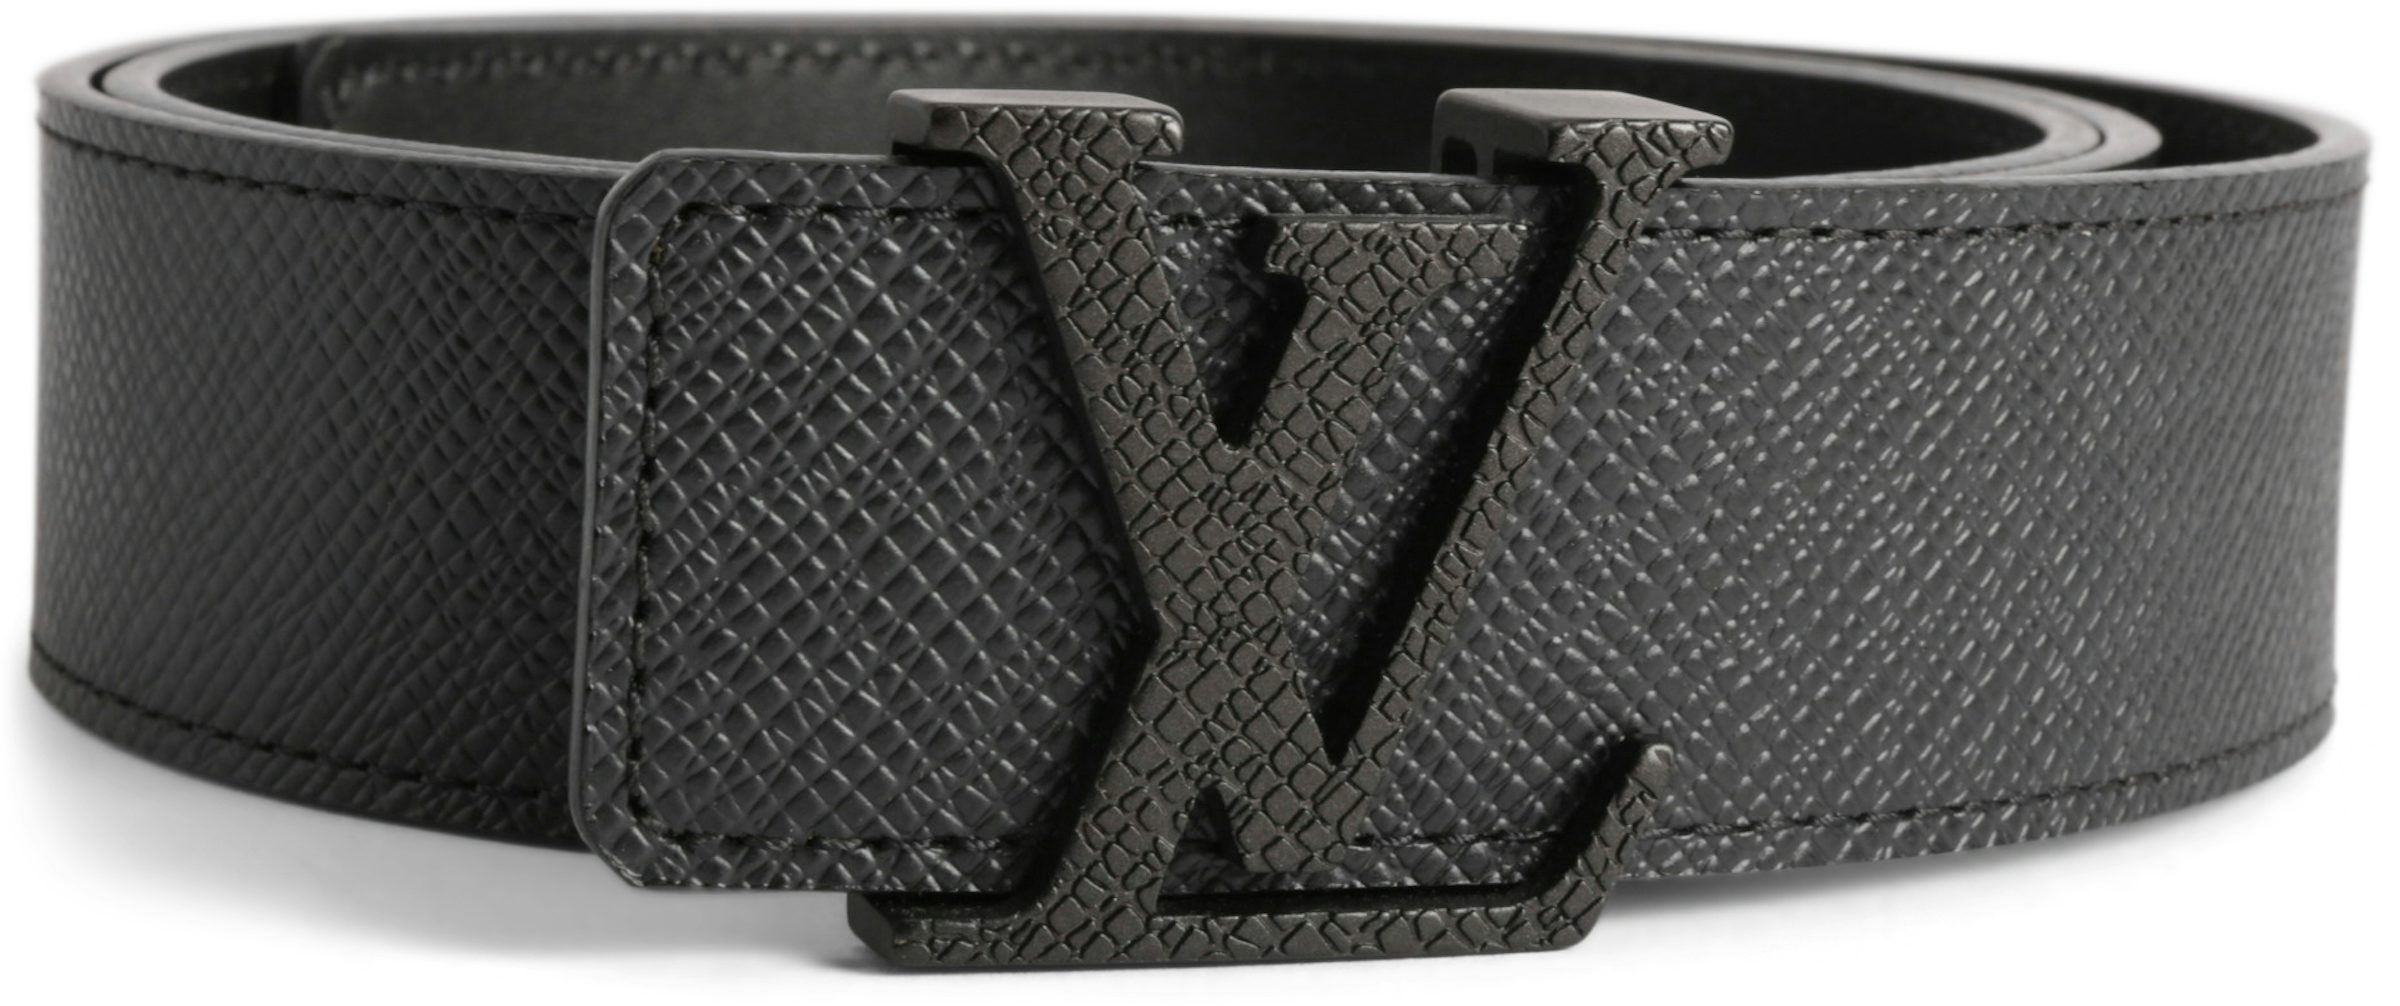 15 Trending Designs of Louis Vuitton Belts For Men And Women